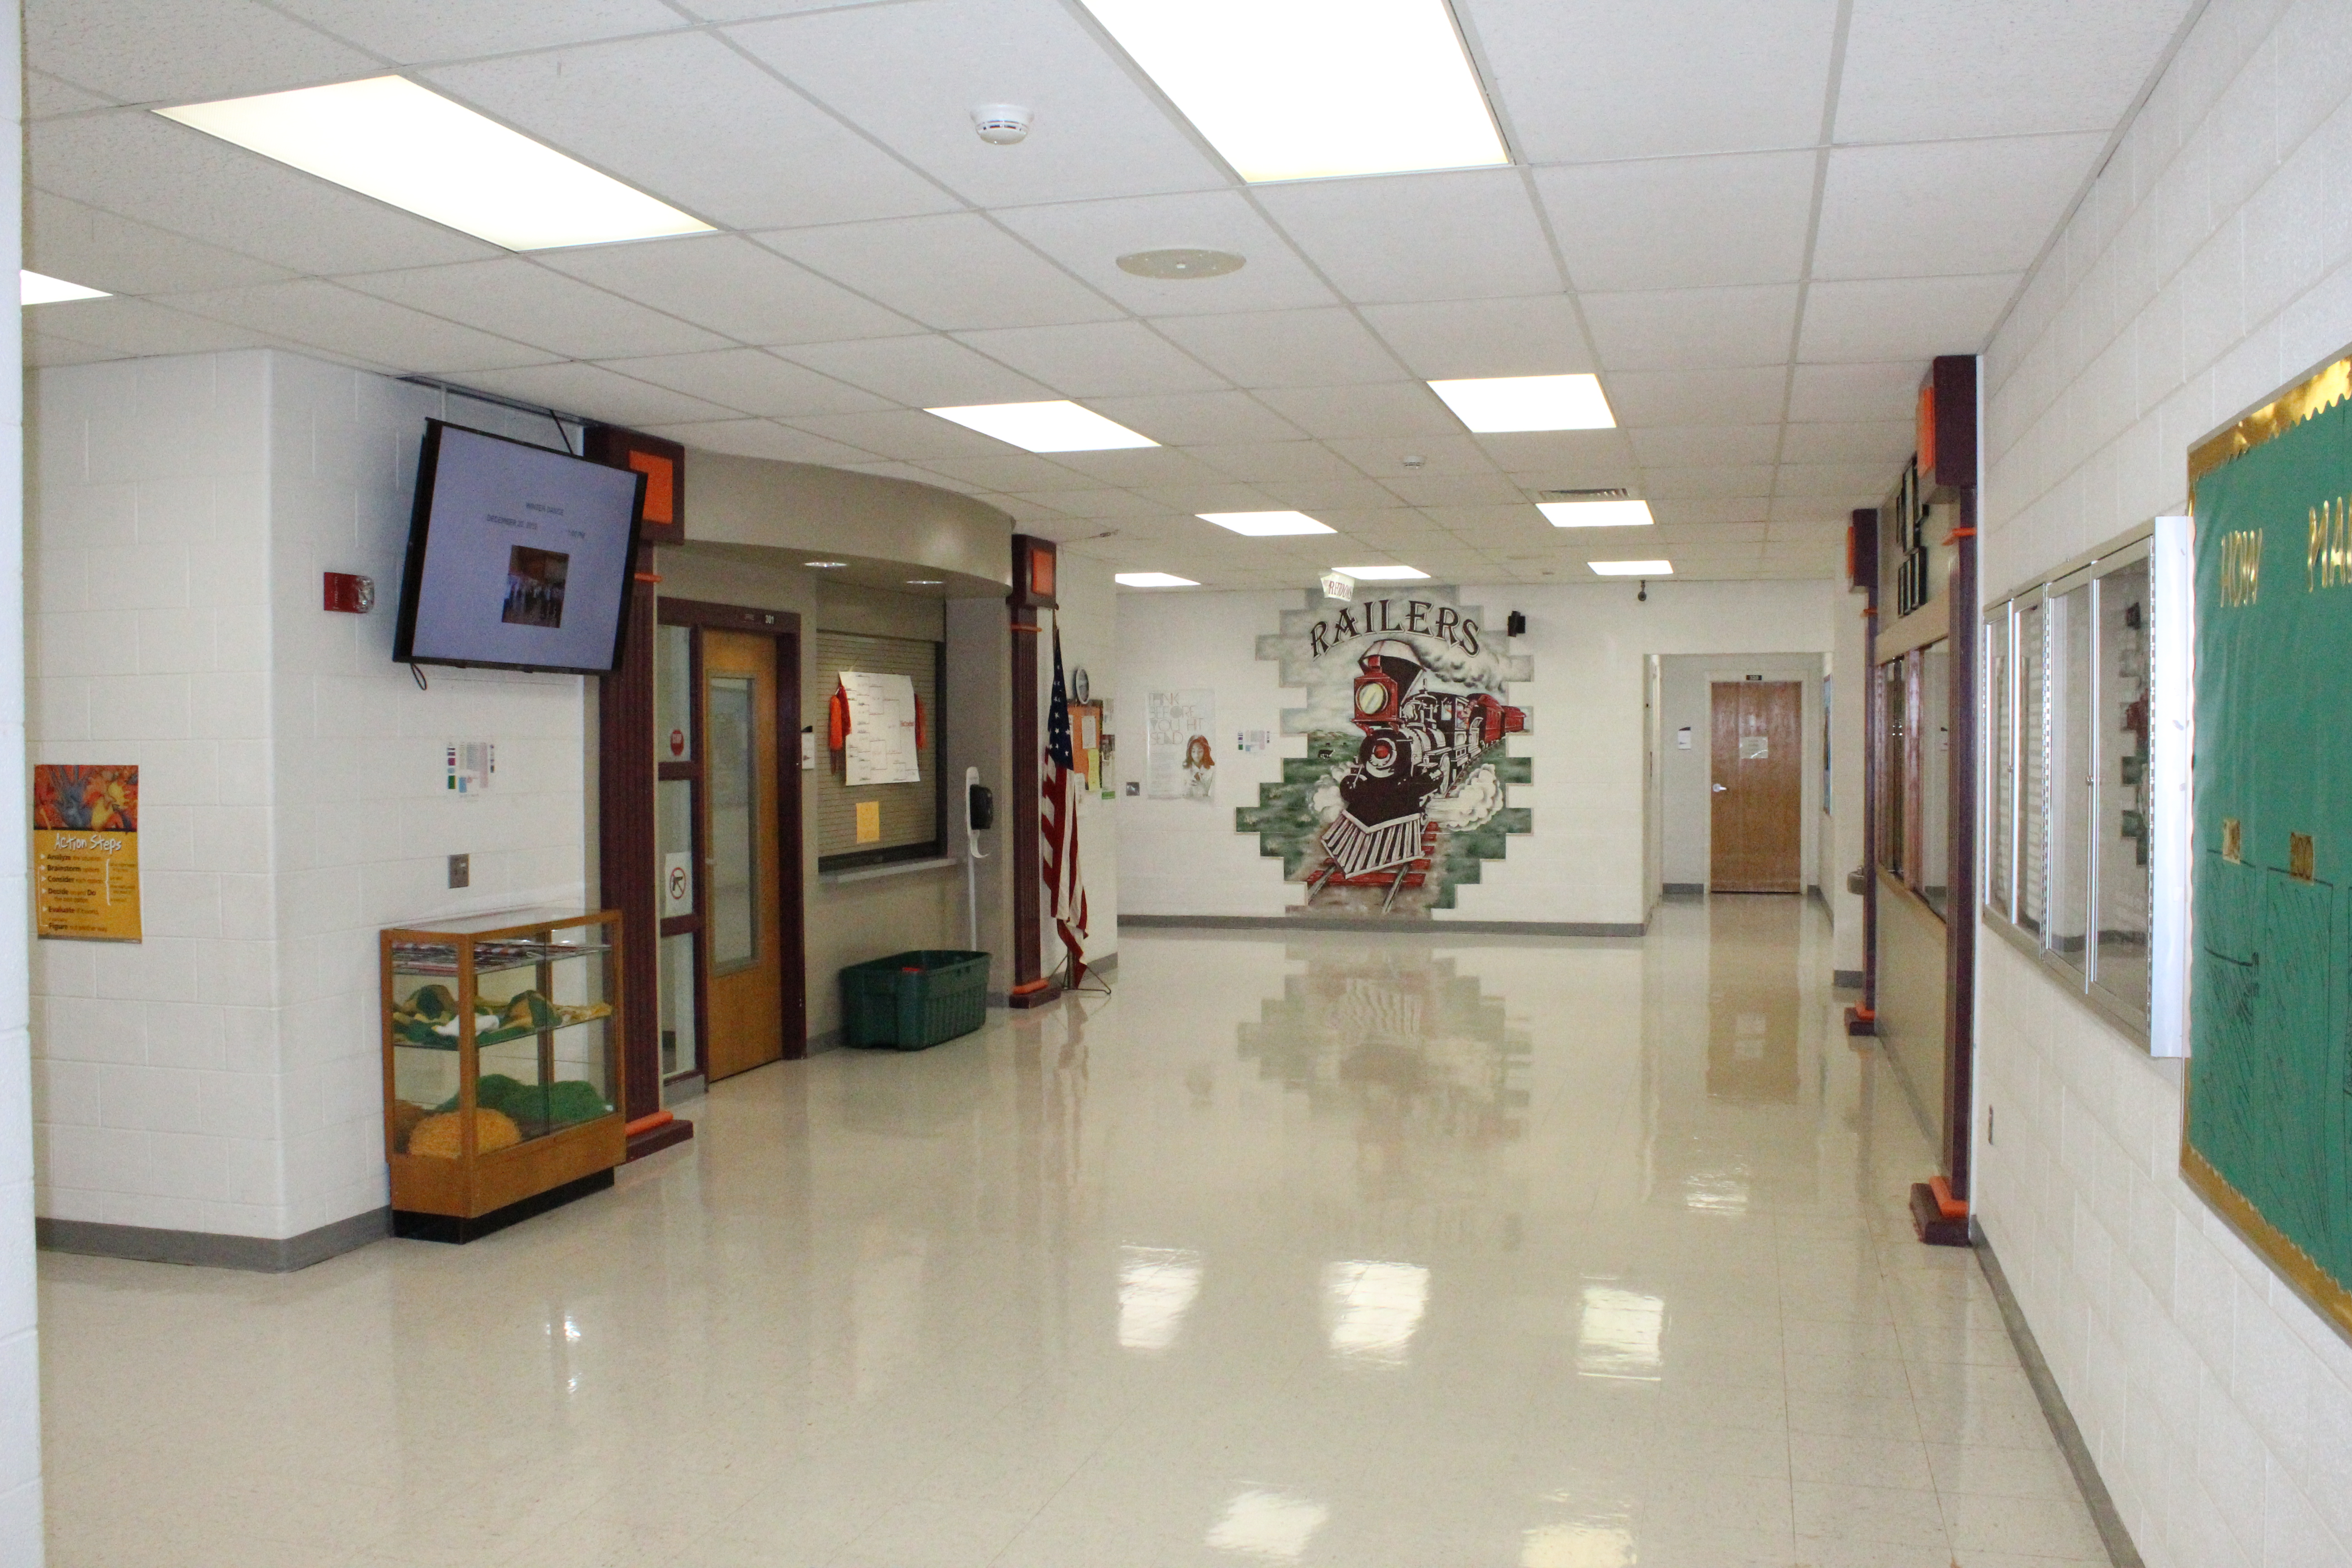 A hallway insisde Herington Middle School.